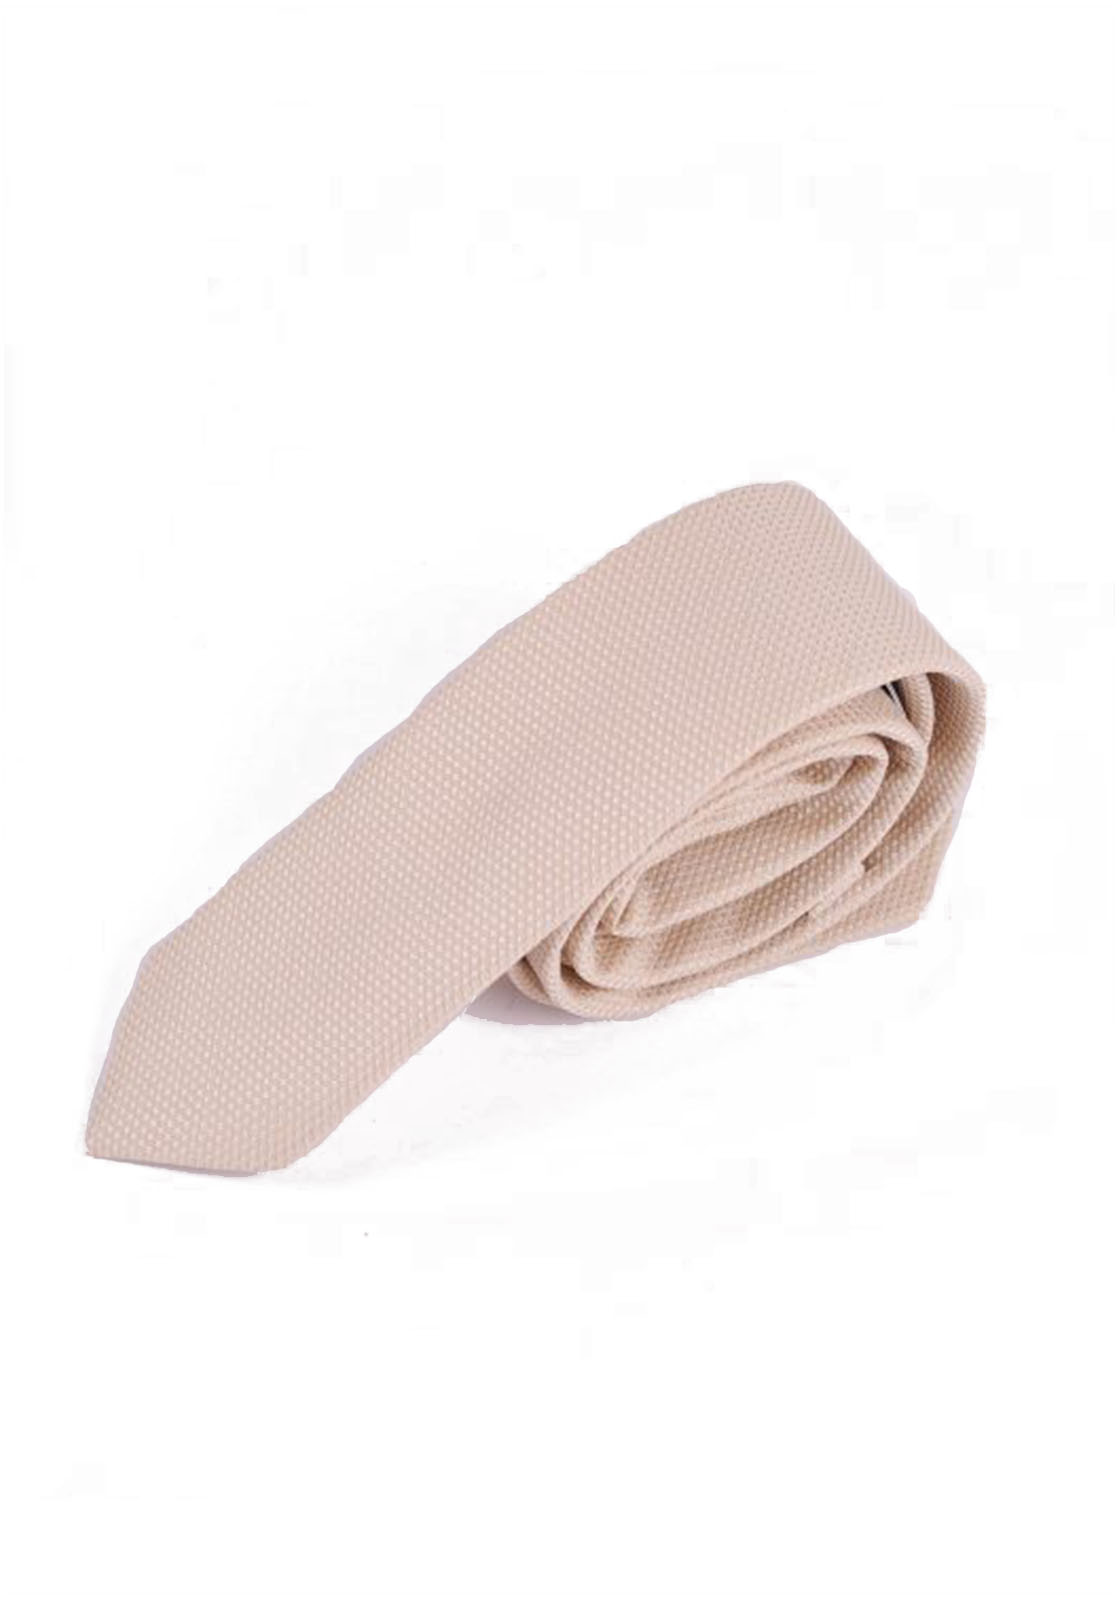 Silk tie in a multi-coloured micro-pattern jacquard - Light Sand